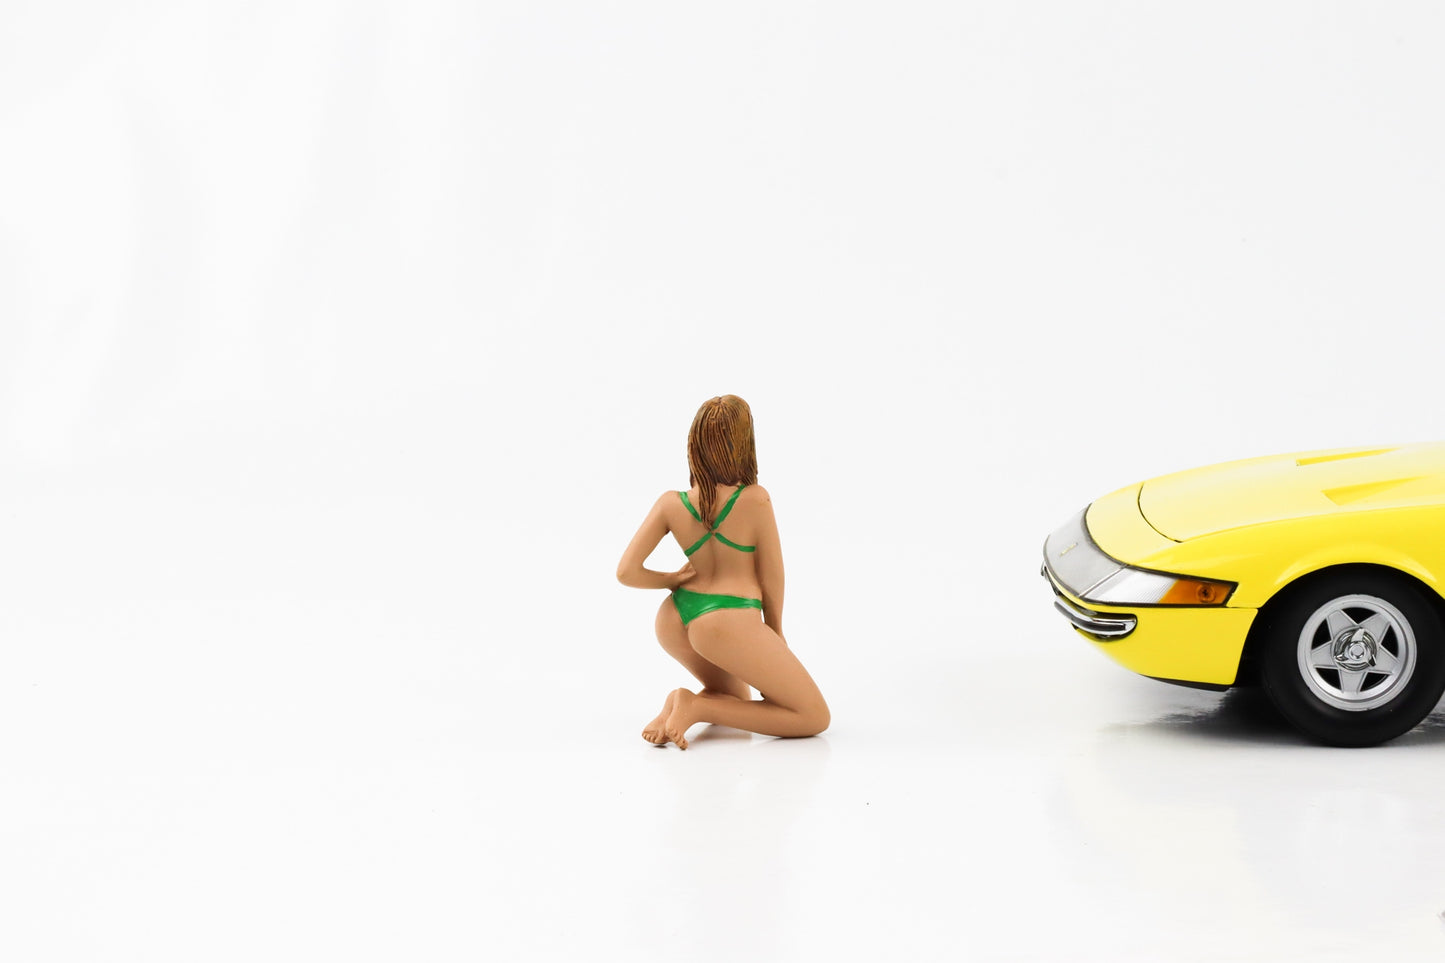 1:18 Figure Bikini Calendar Girl February American Diorama Figures